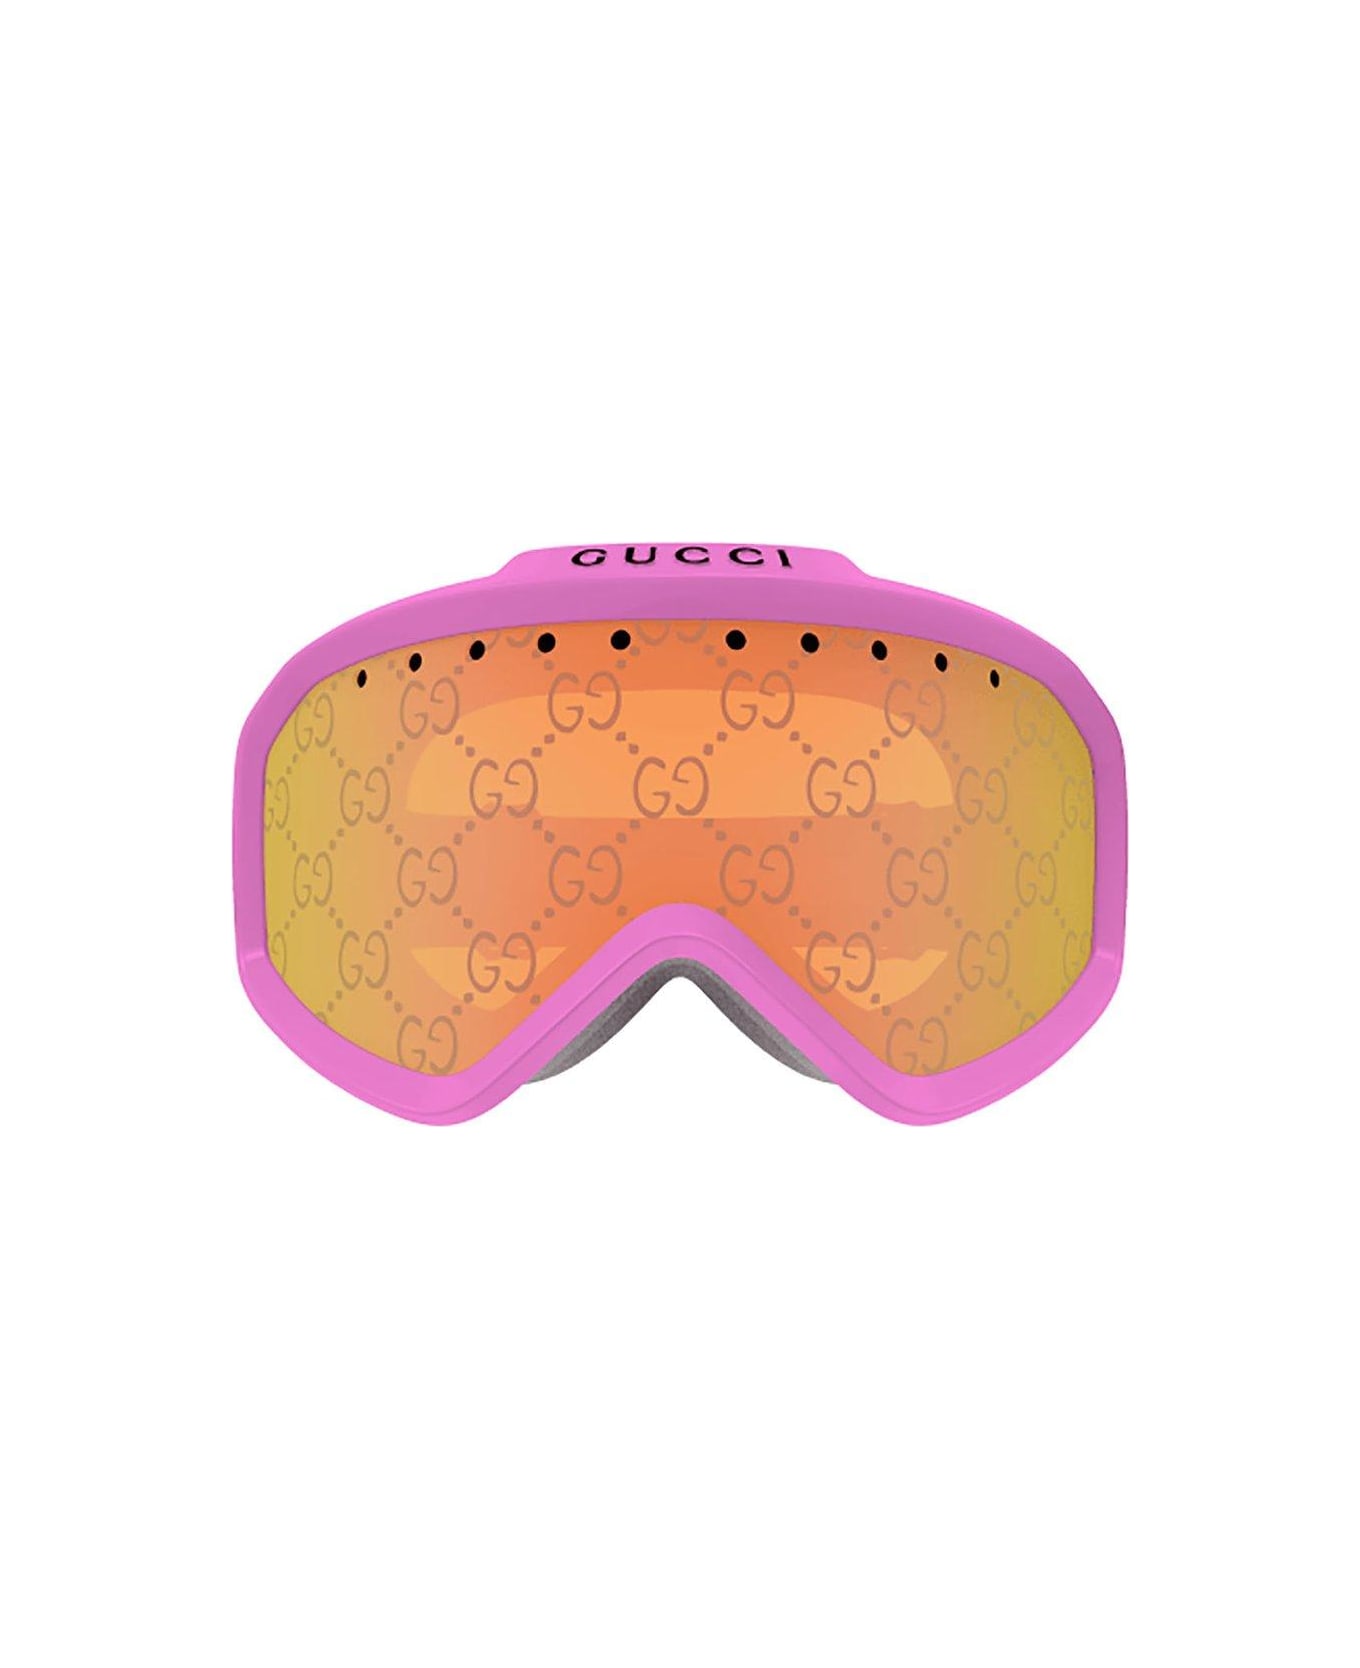 Gucci Eyewear Ski Oversized Frame Goggles - 004 pink multicolor yello